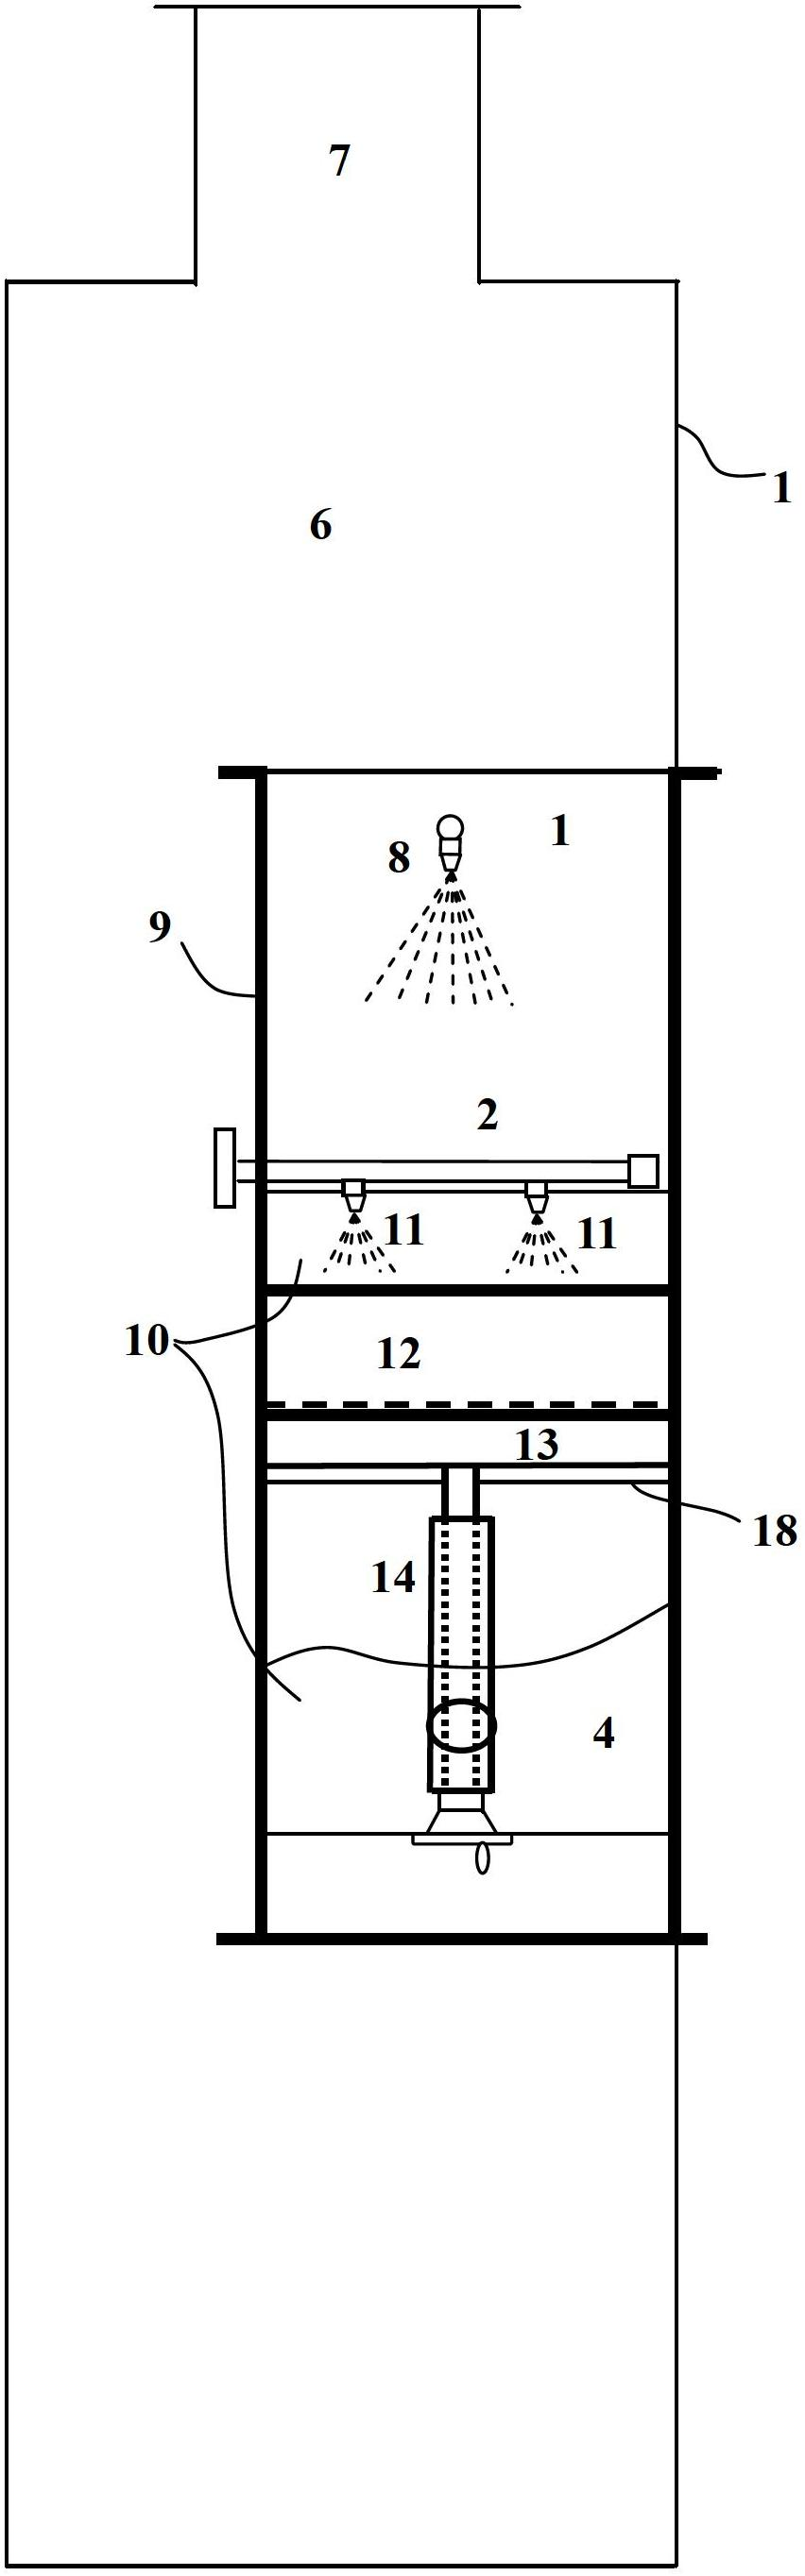 Integrated Venturi air washing device